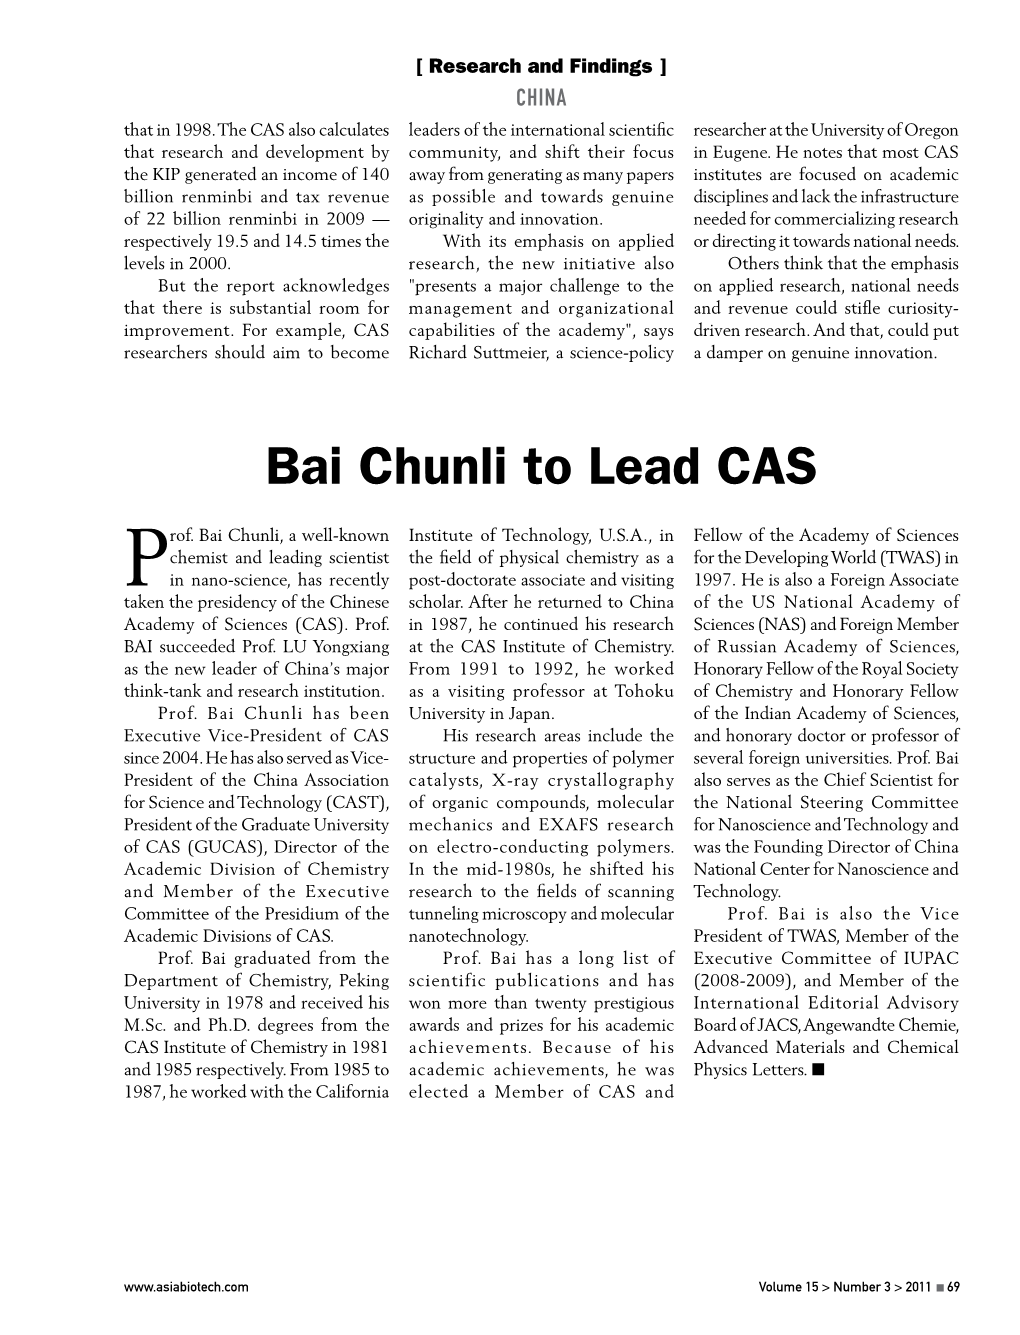 Bai Chunli to Lead CAS